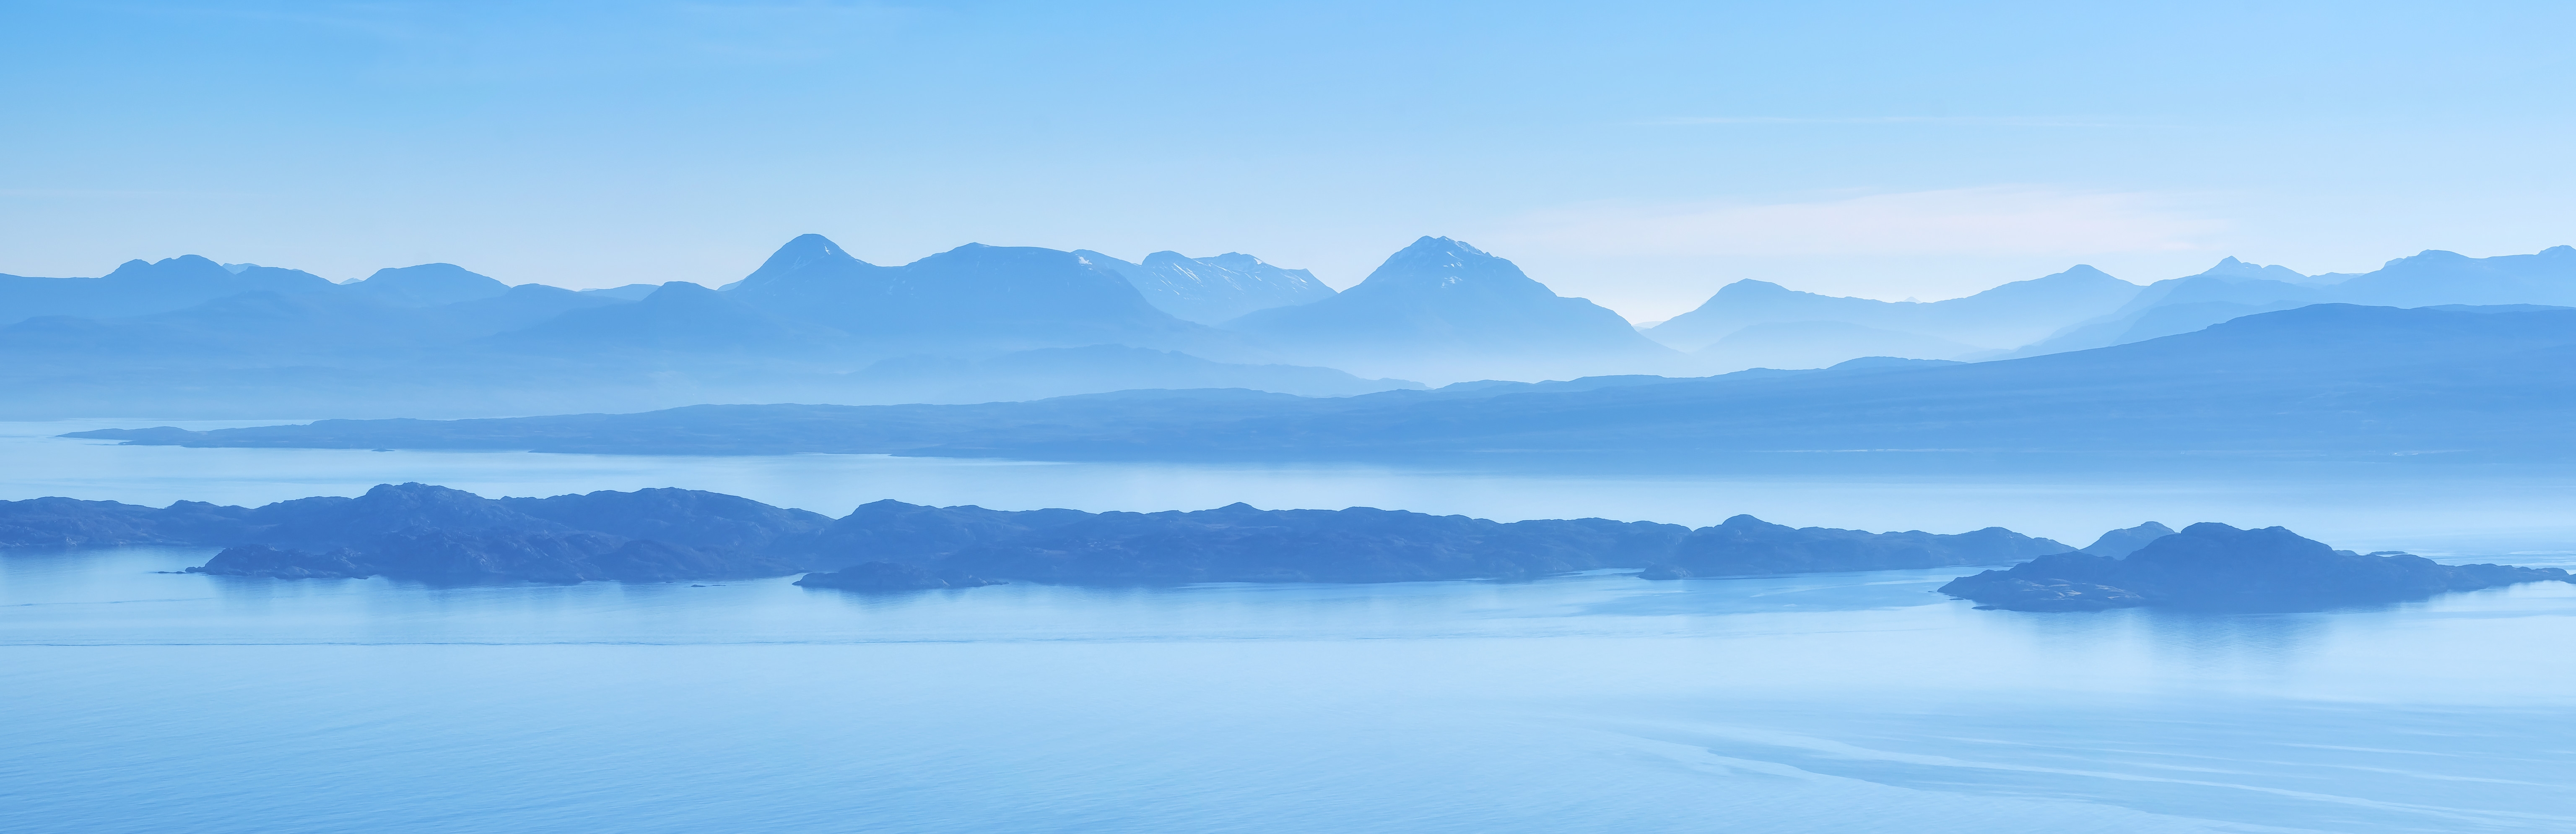 HD wallpaper, Sound Of Raasay, Scotland, Scenery, Landscape, Mountain Range, Foggy, 5K, Panorama, Isle Of Skye, Blue Sky, Wester Ross, Island